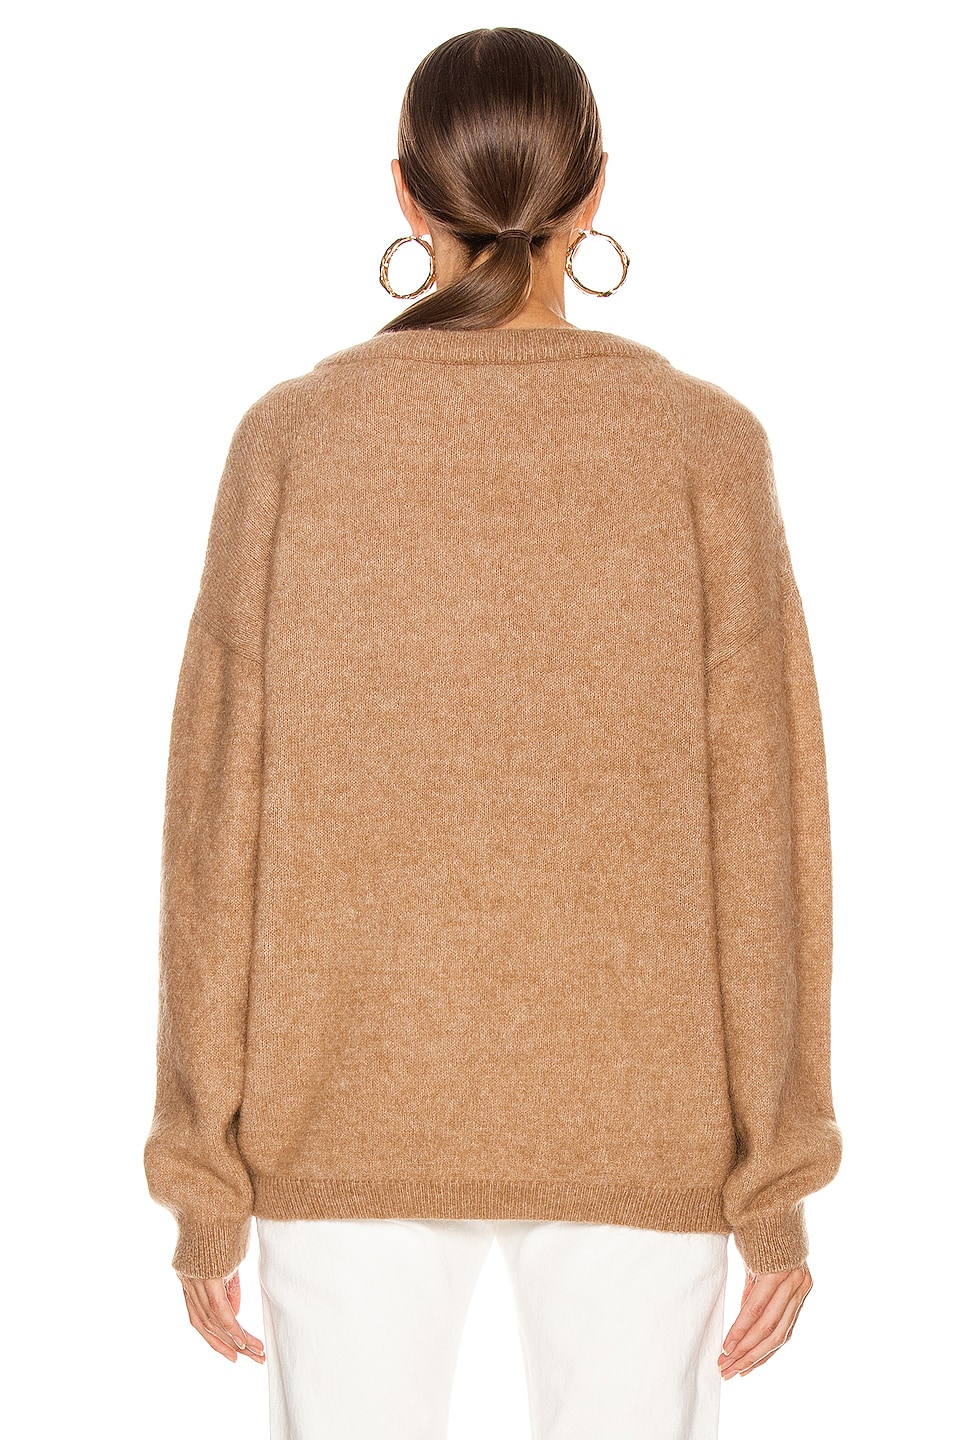 Acne Studios Dramatic Mohair Sweater in Caramel Brown | FWRD